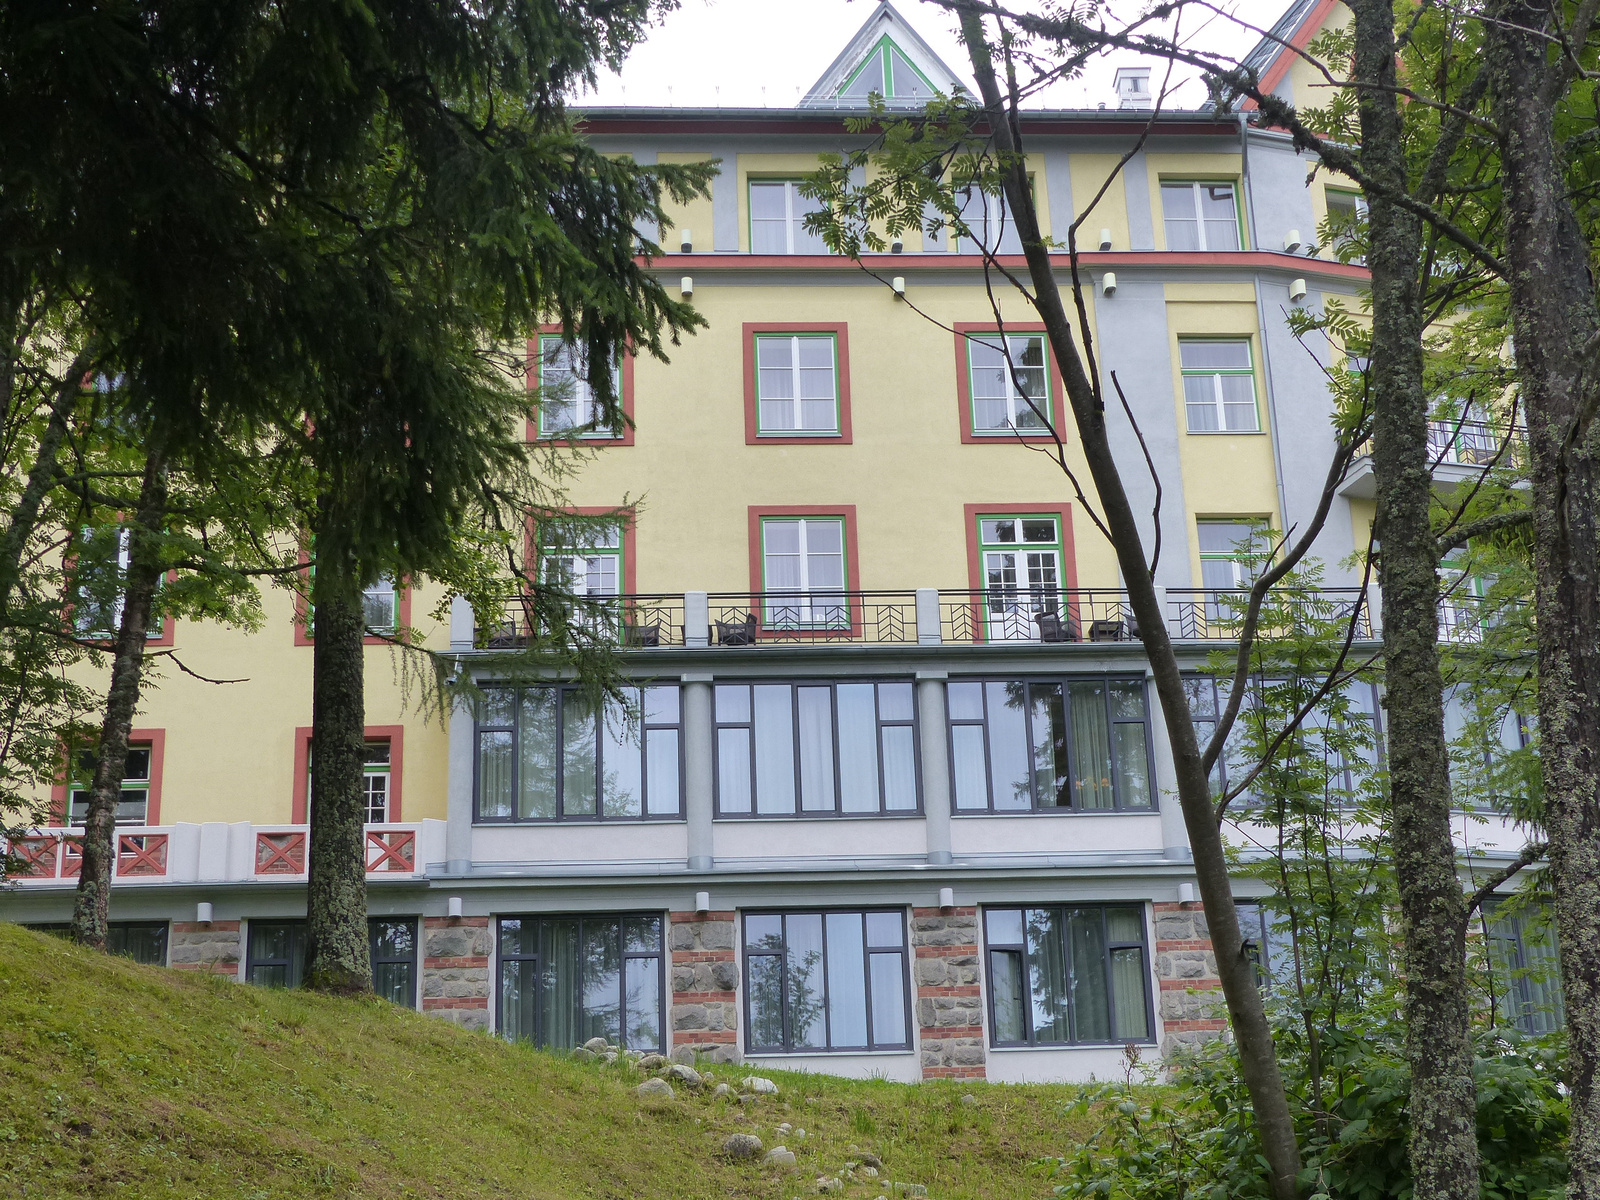 Csorbató (Štrbské Pleso), Grand Hotel Kempinski High Tatras, Sz